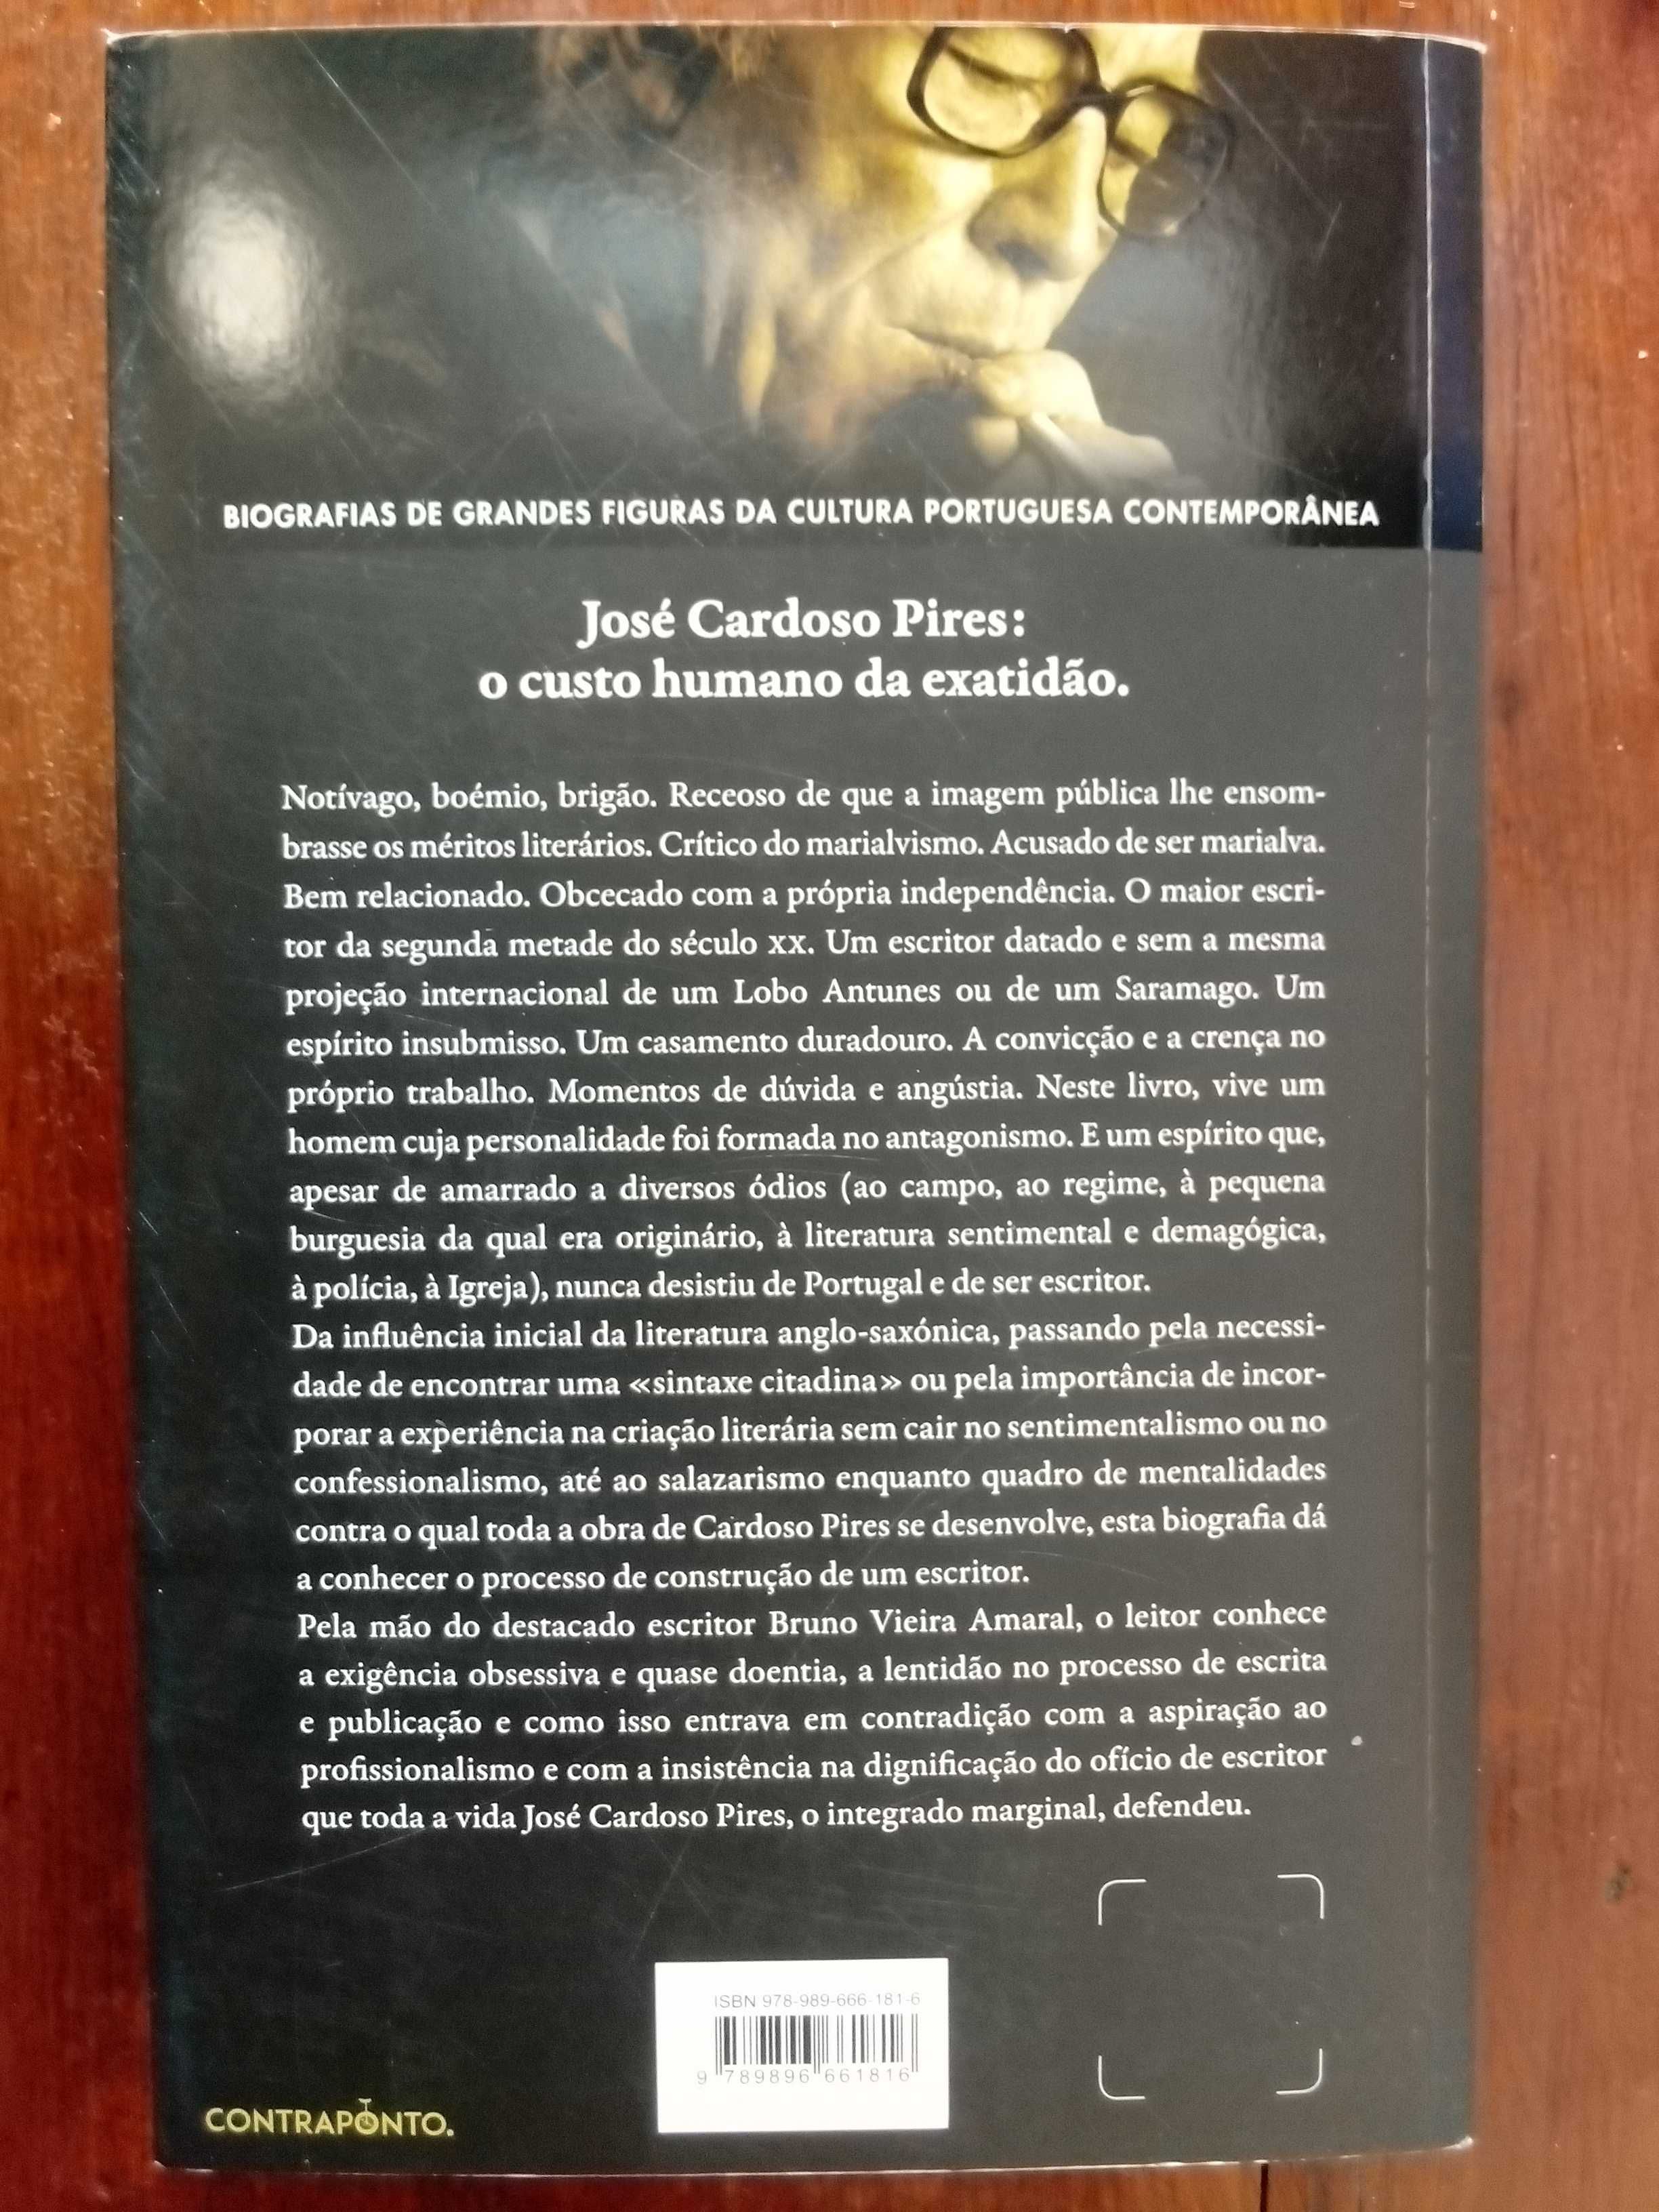 Integrado marginal, biografia de José Cardoso Pires